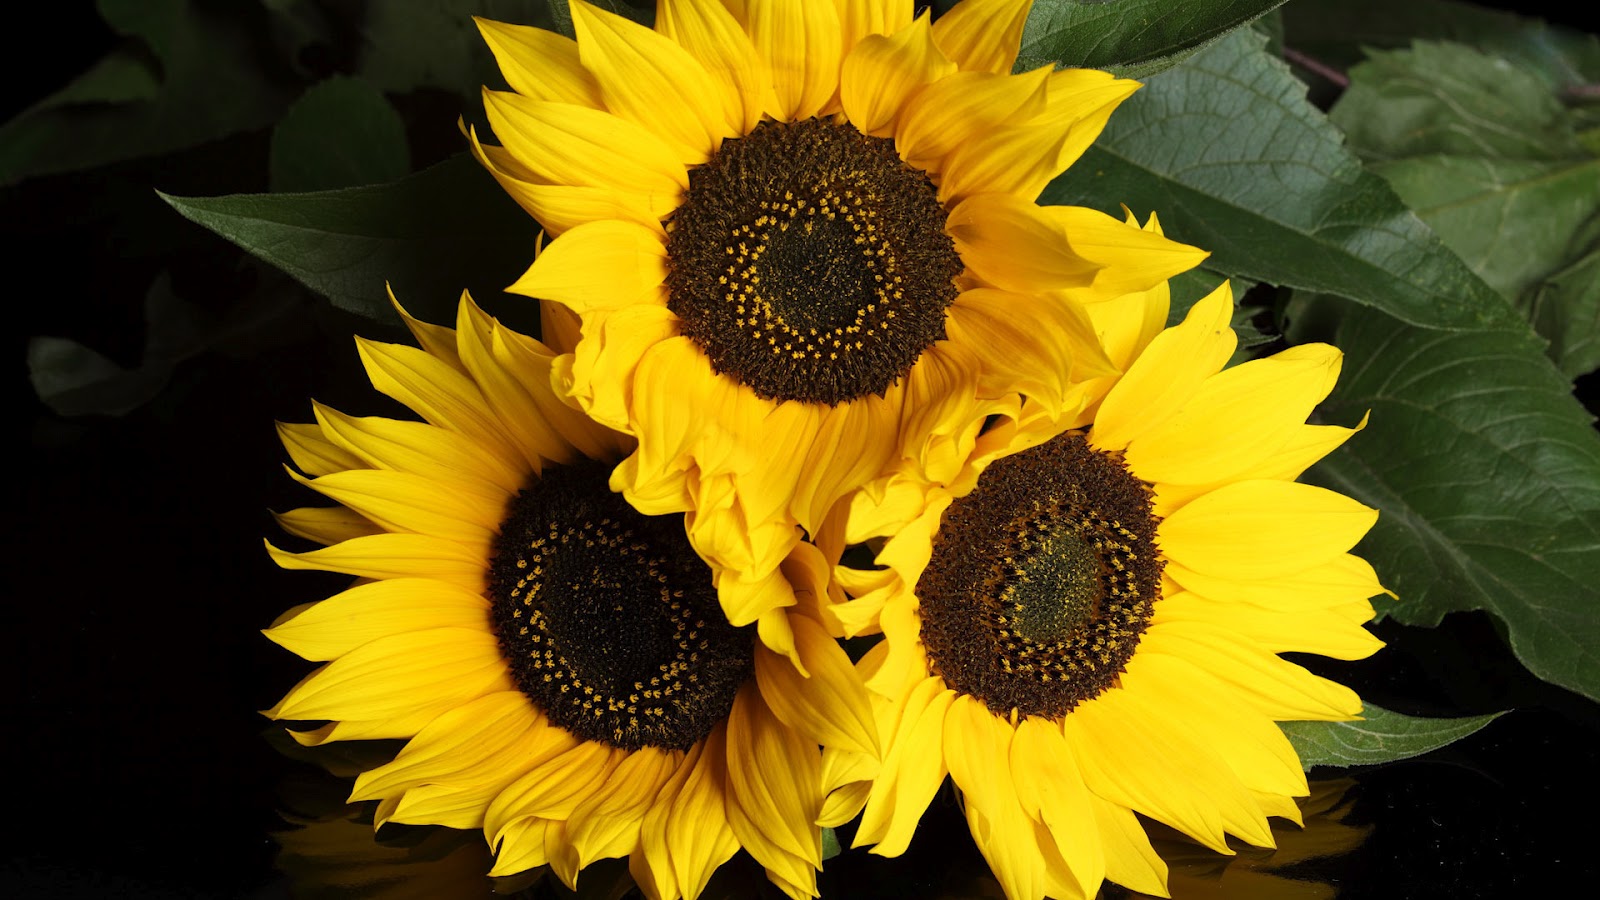 Your Wallpaper Sunflower